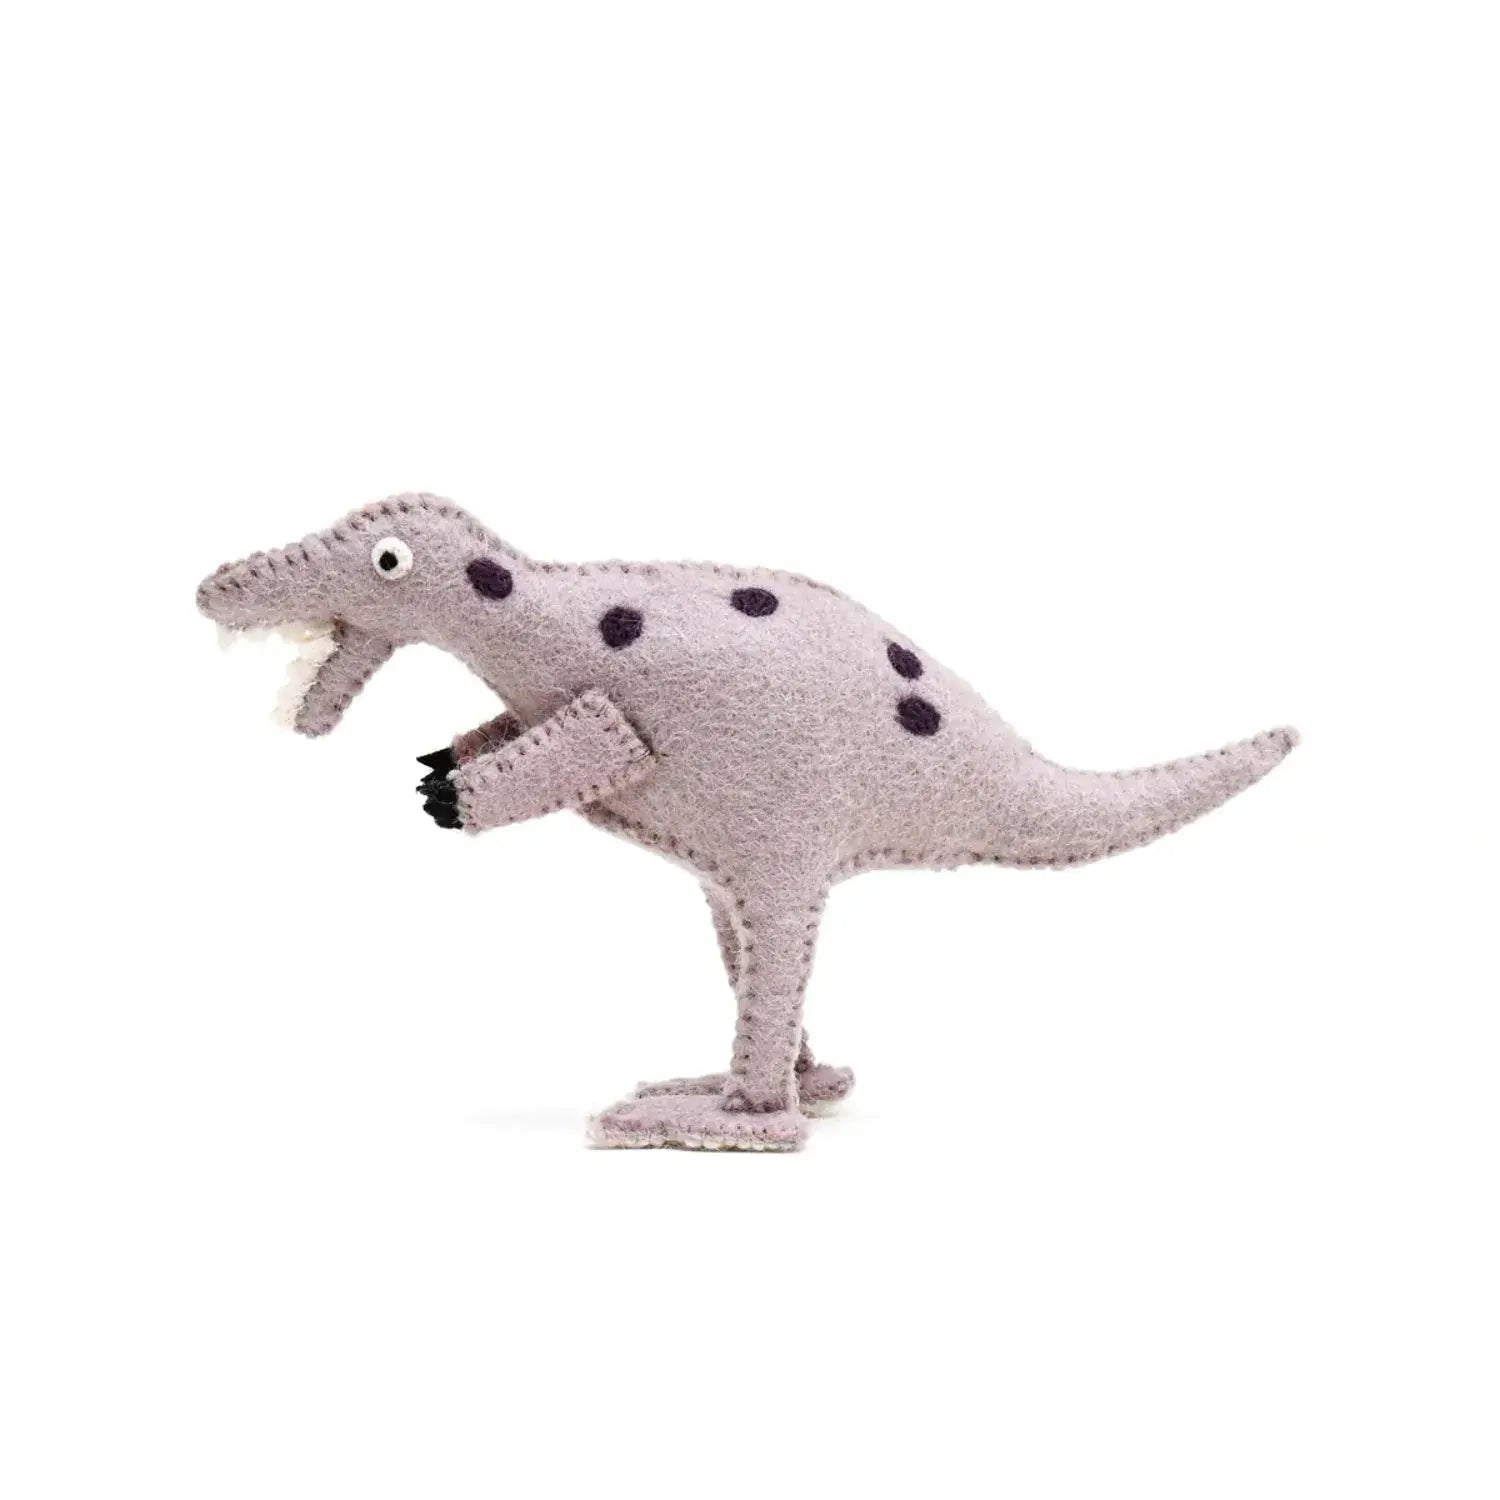 Felt Tyrannosaurus Rex Dinosaur Toy by Tara Treasures (T Rex)